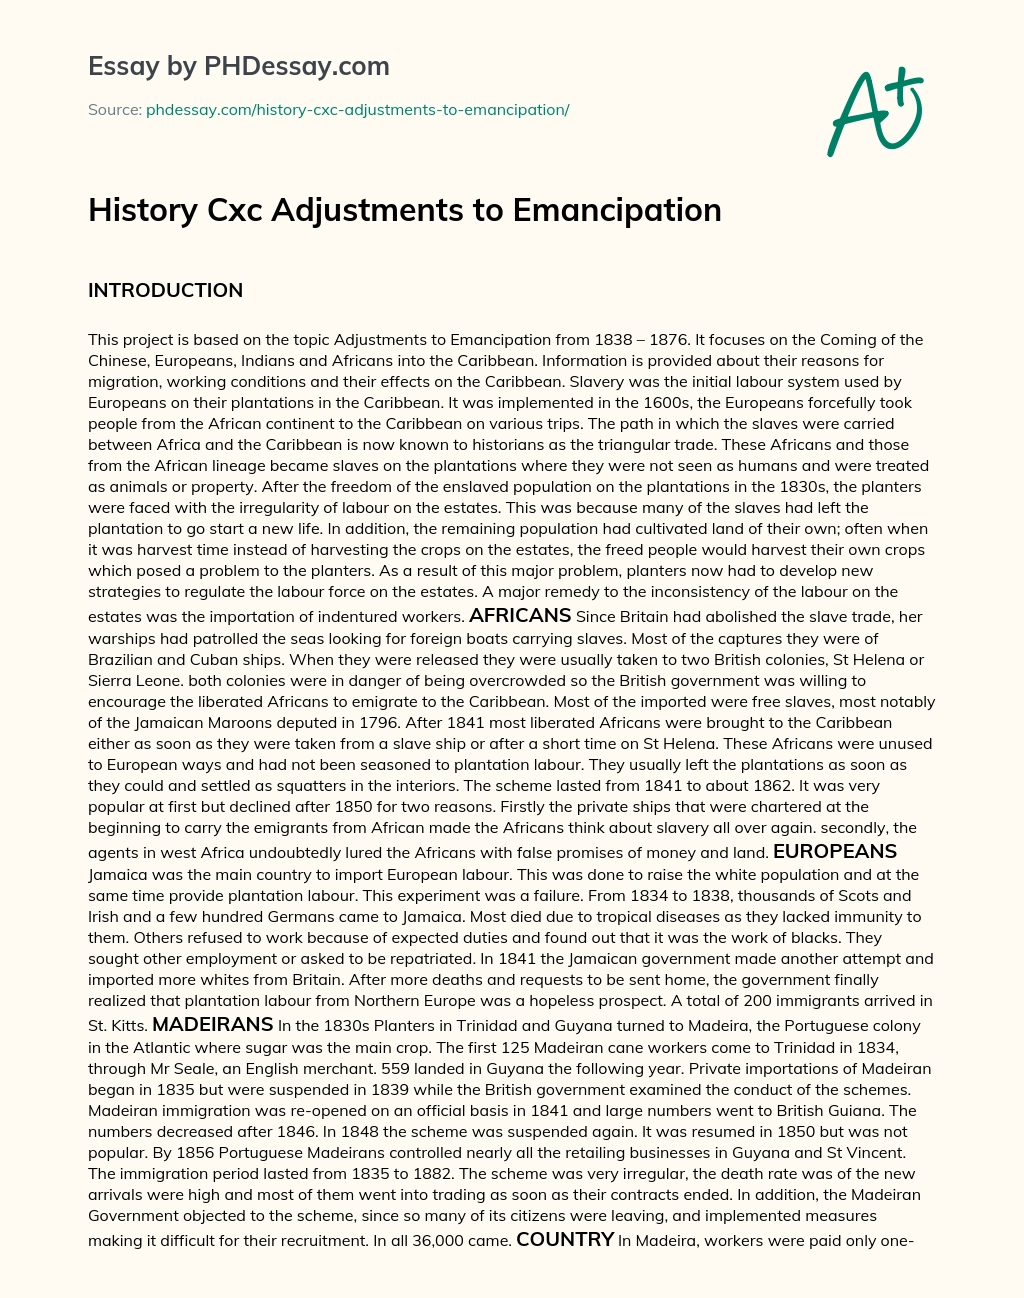 History Cxc Adjustments to Emancipation essay